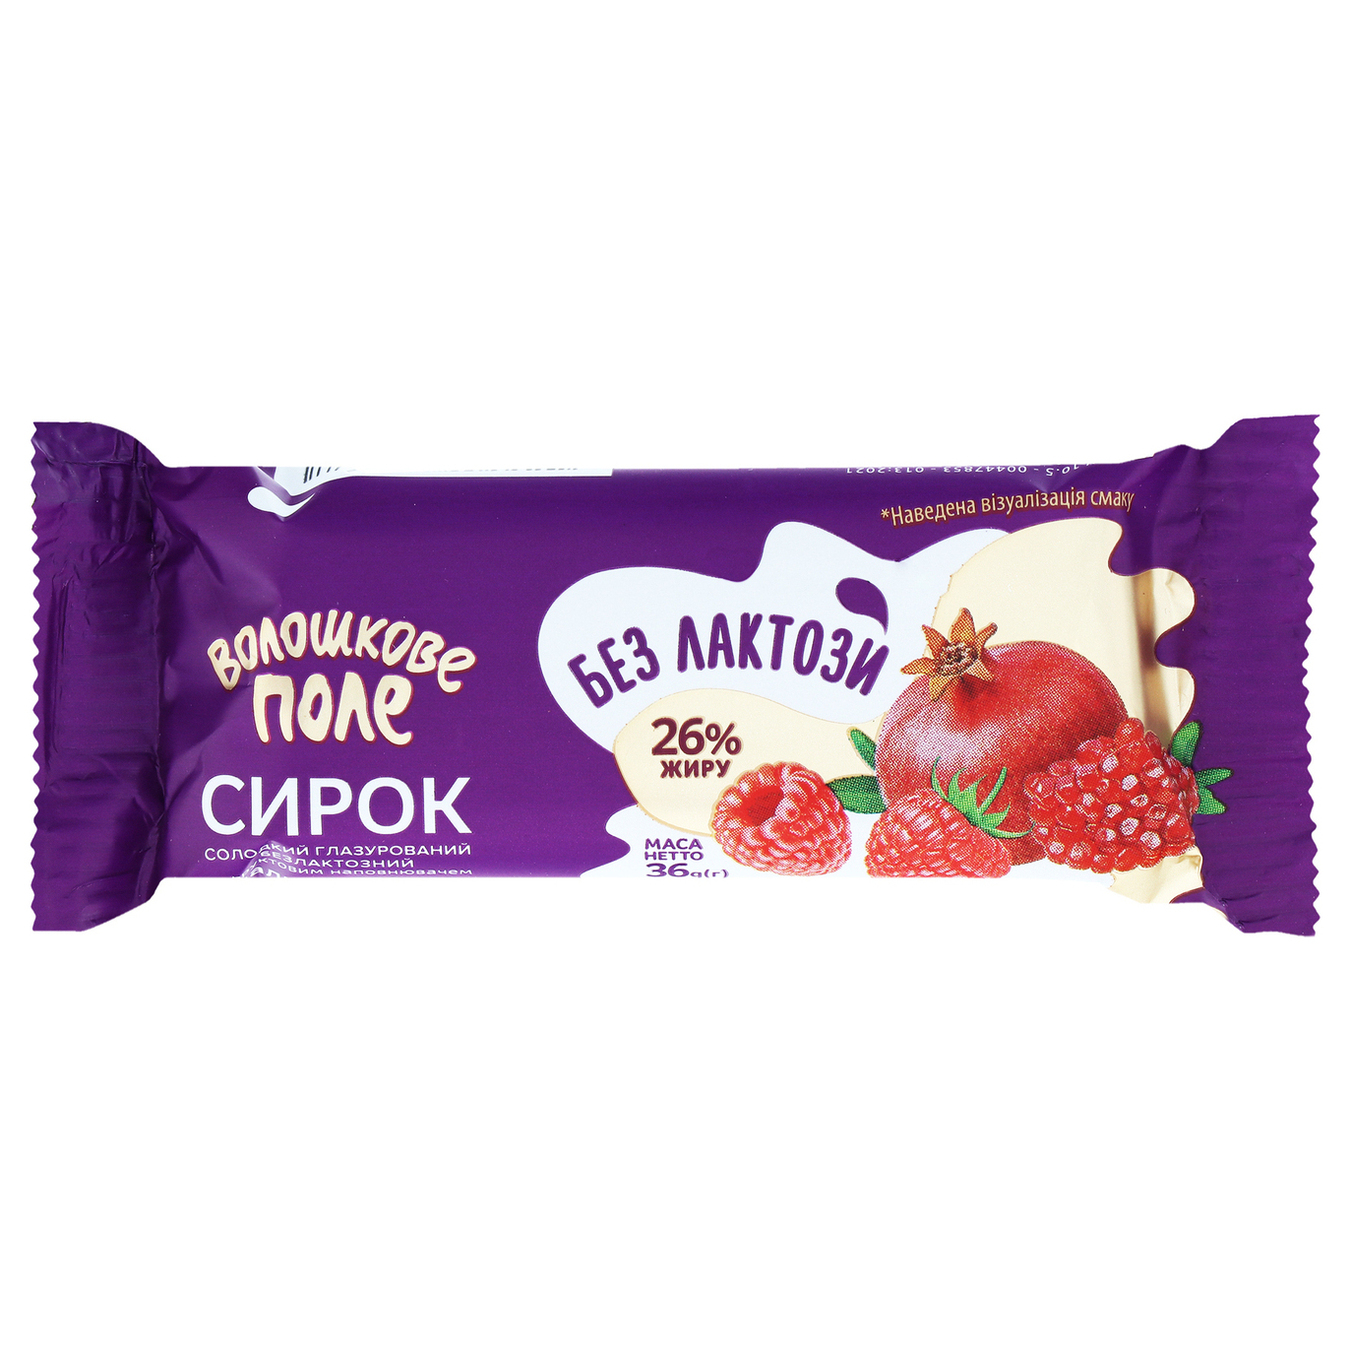 Voloshkove pole Glazed cottage cheese Raspberry-pomegranate lactose-free 26% 36g